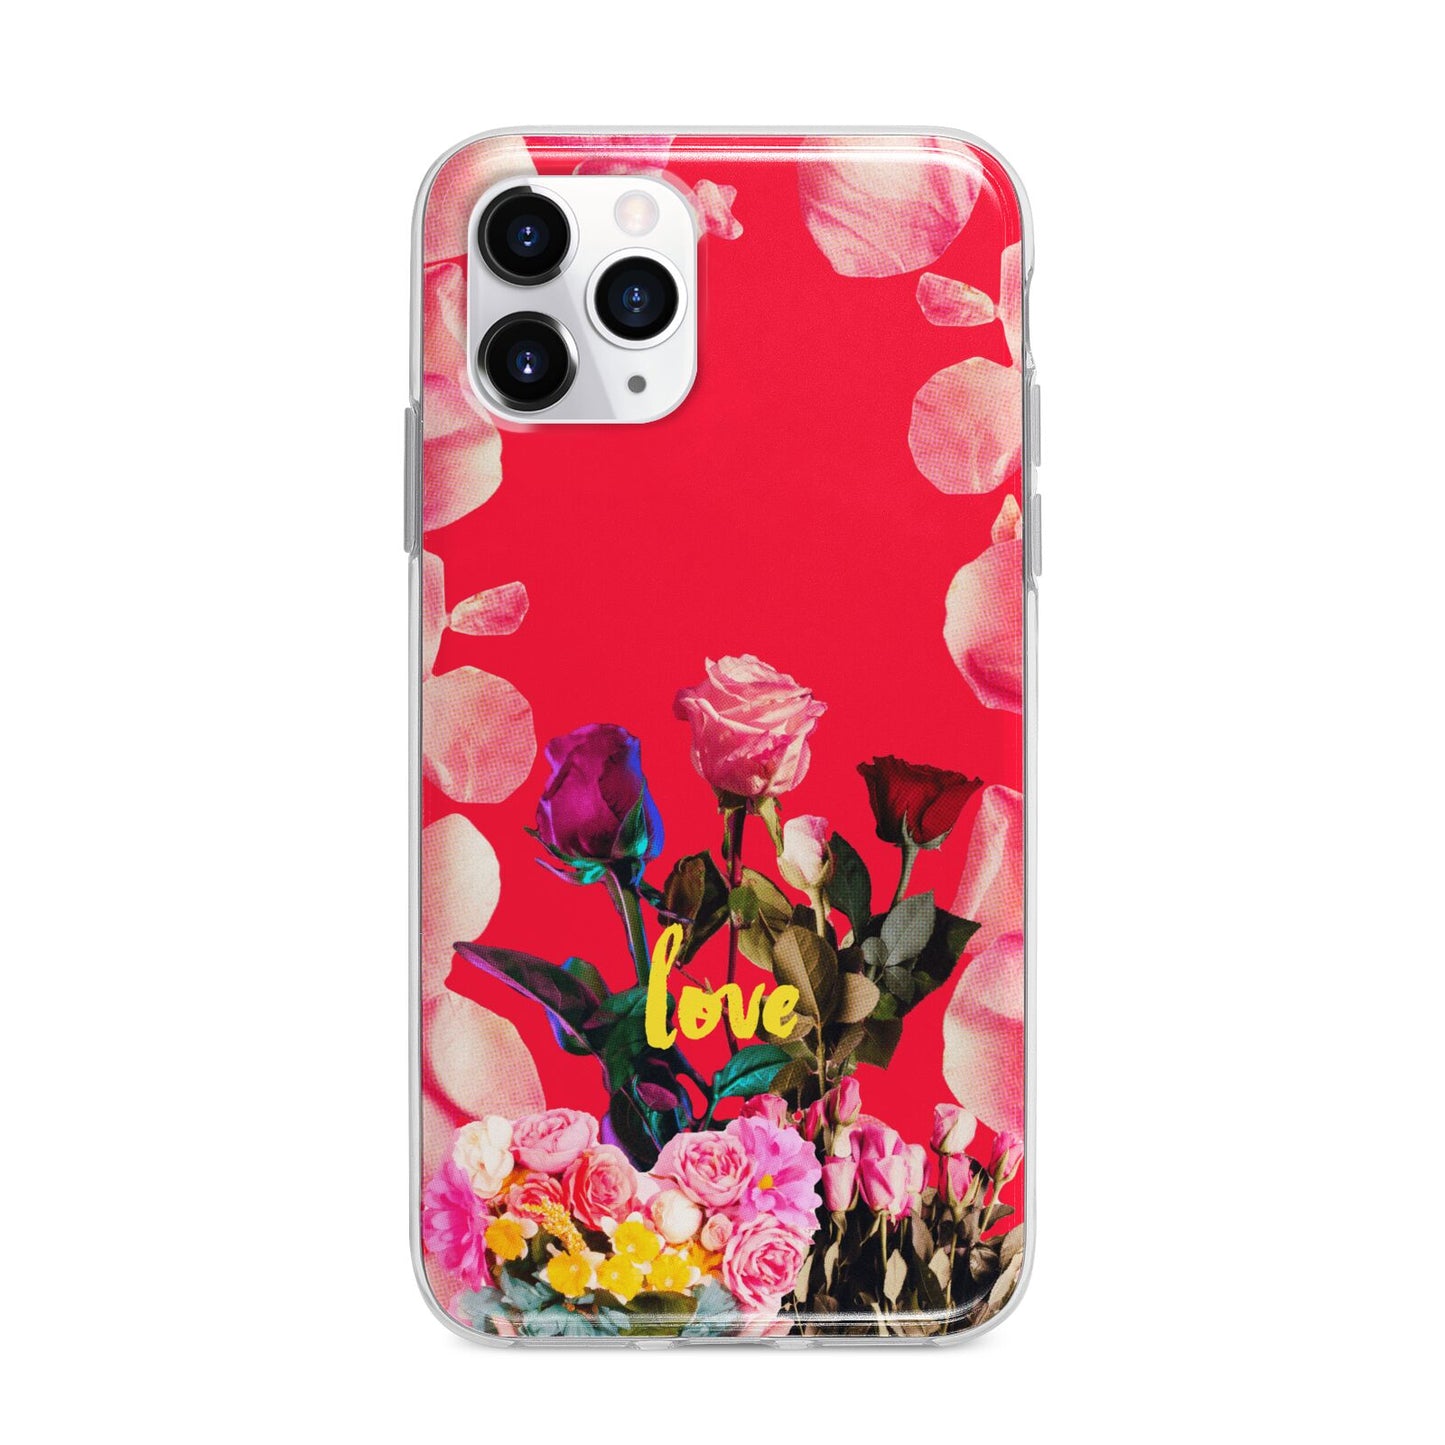 Retro Floral Valentine Apple iPhone 11 Pro in Silver with Bumper Case